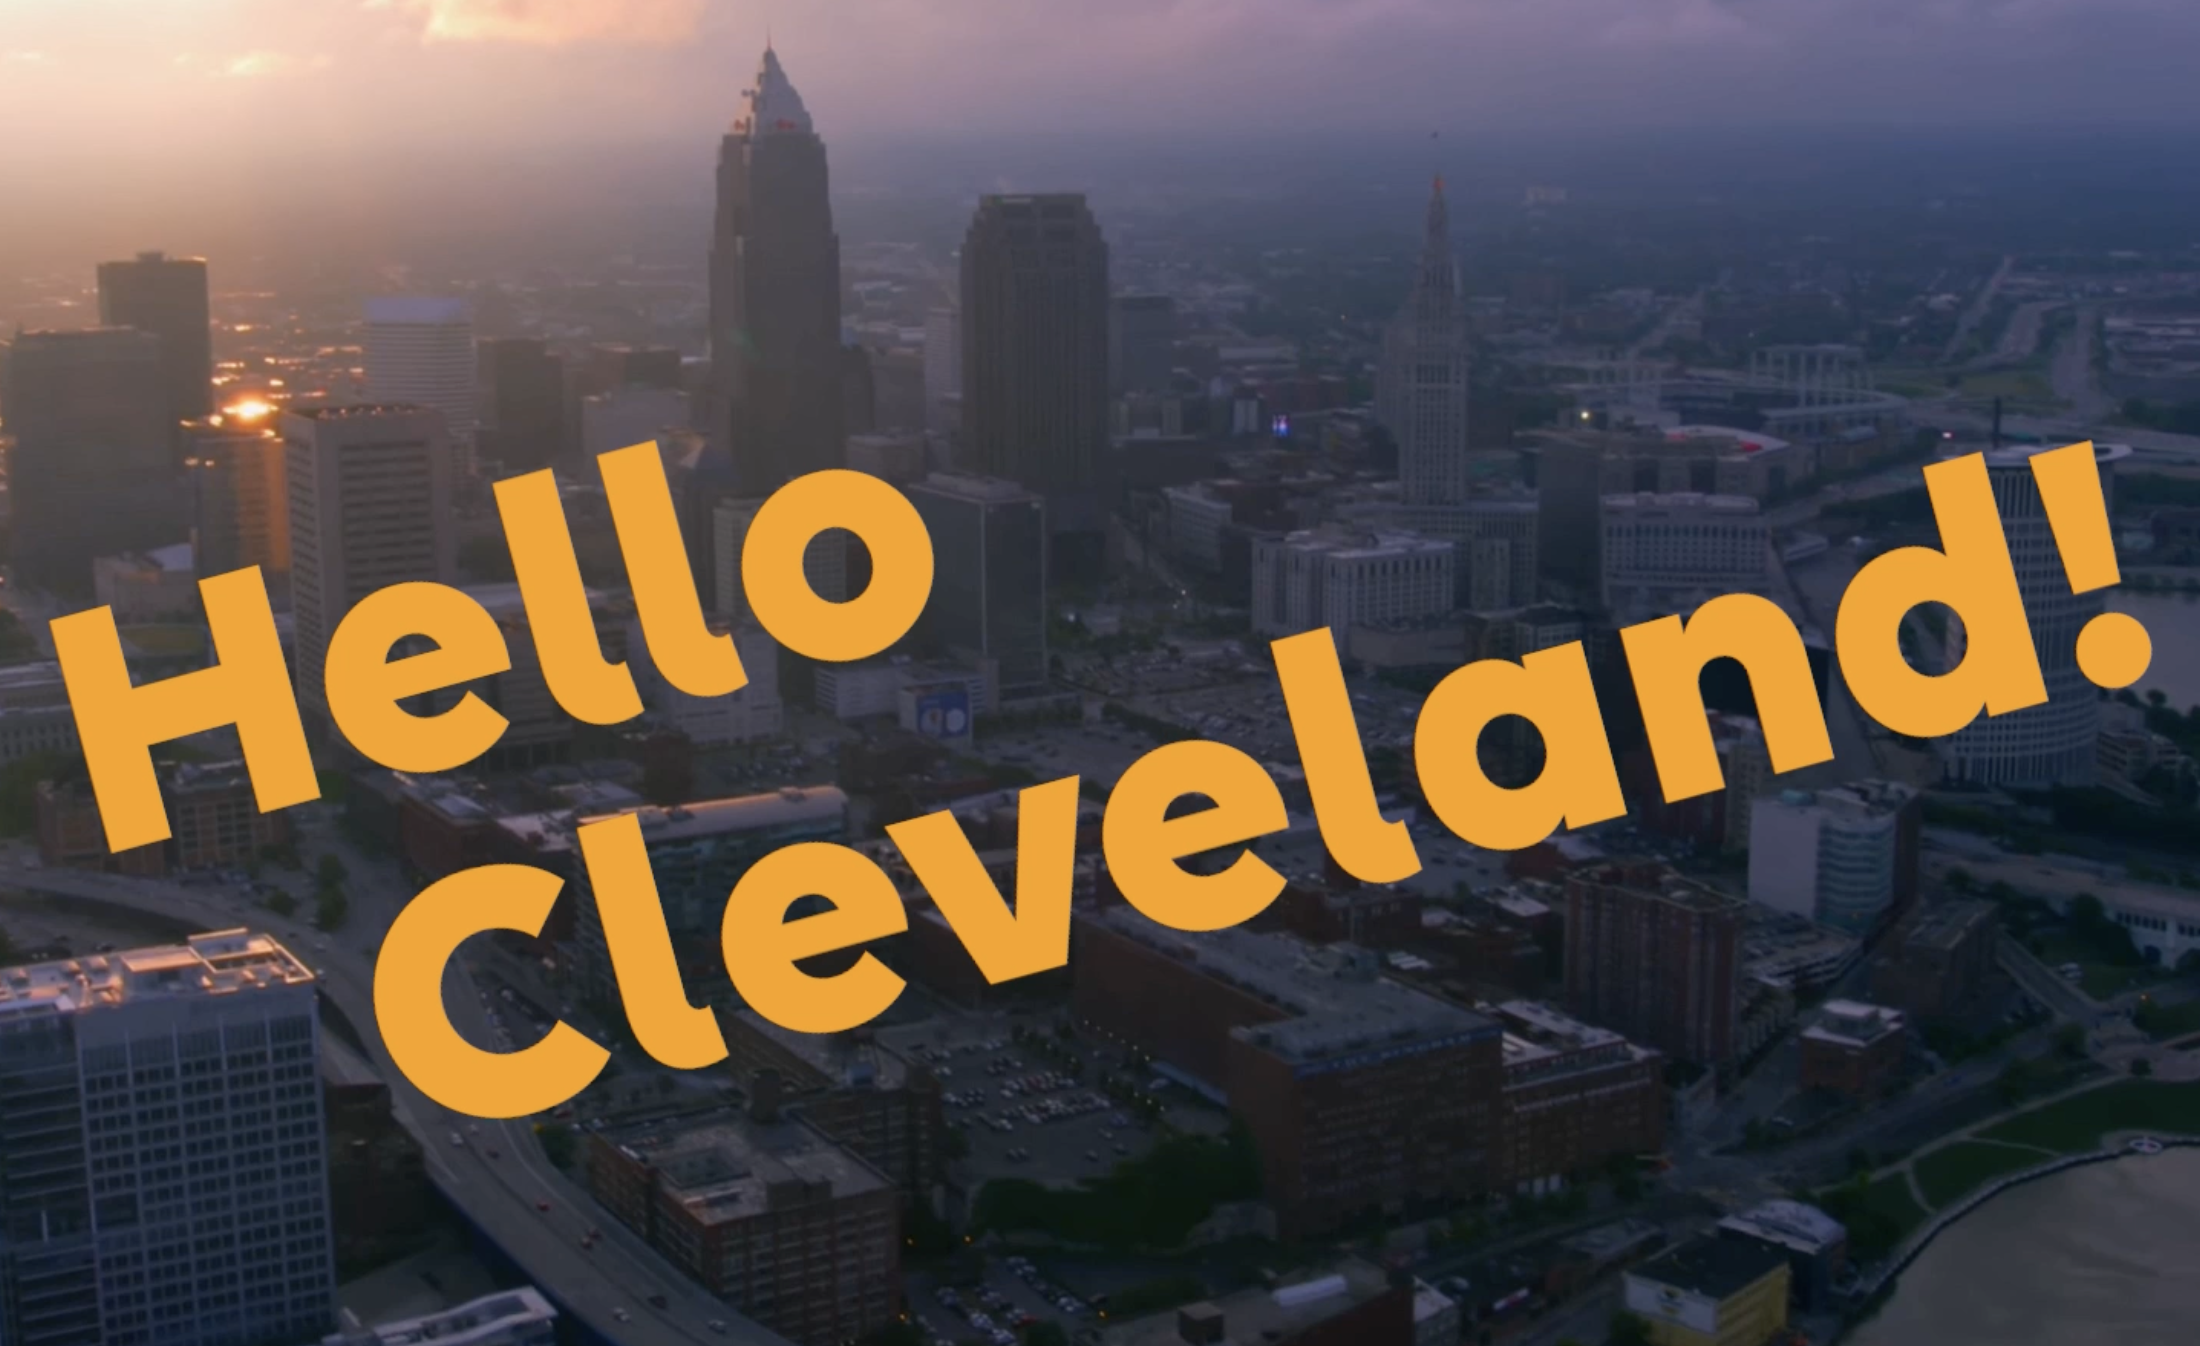 Hello Cleveland!